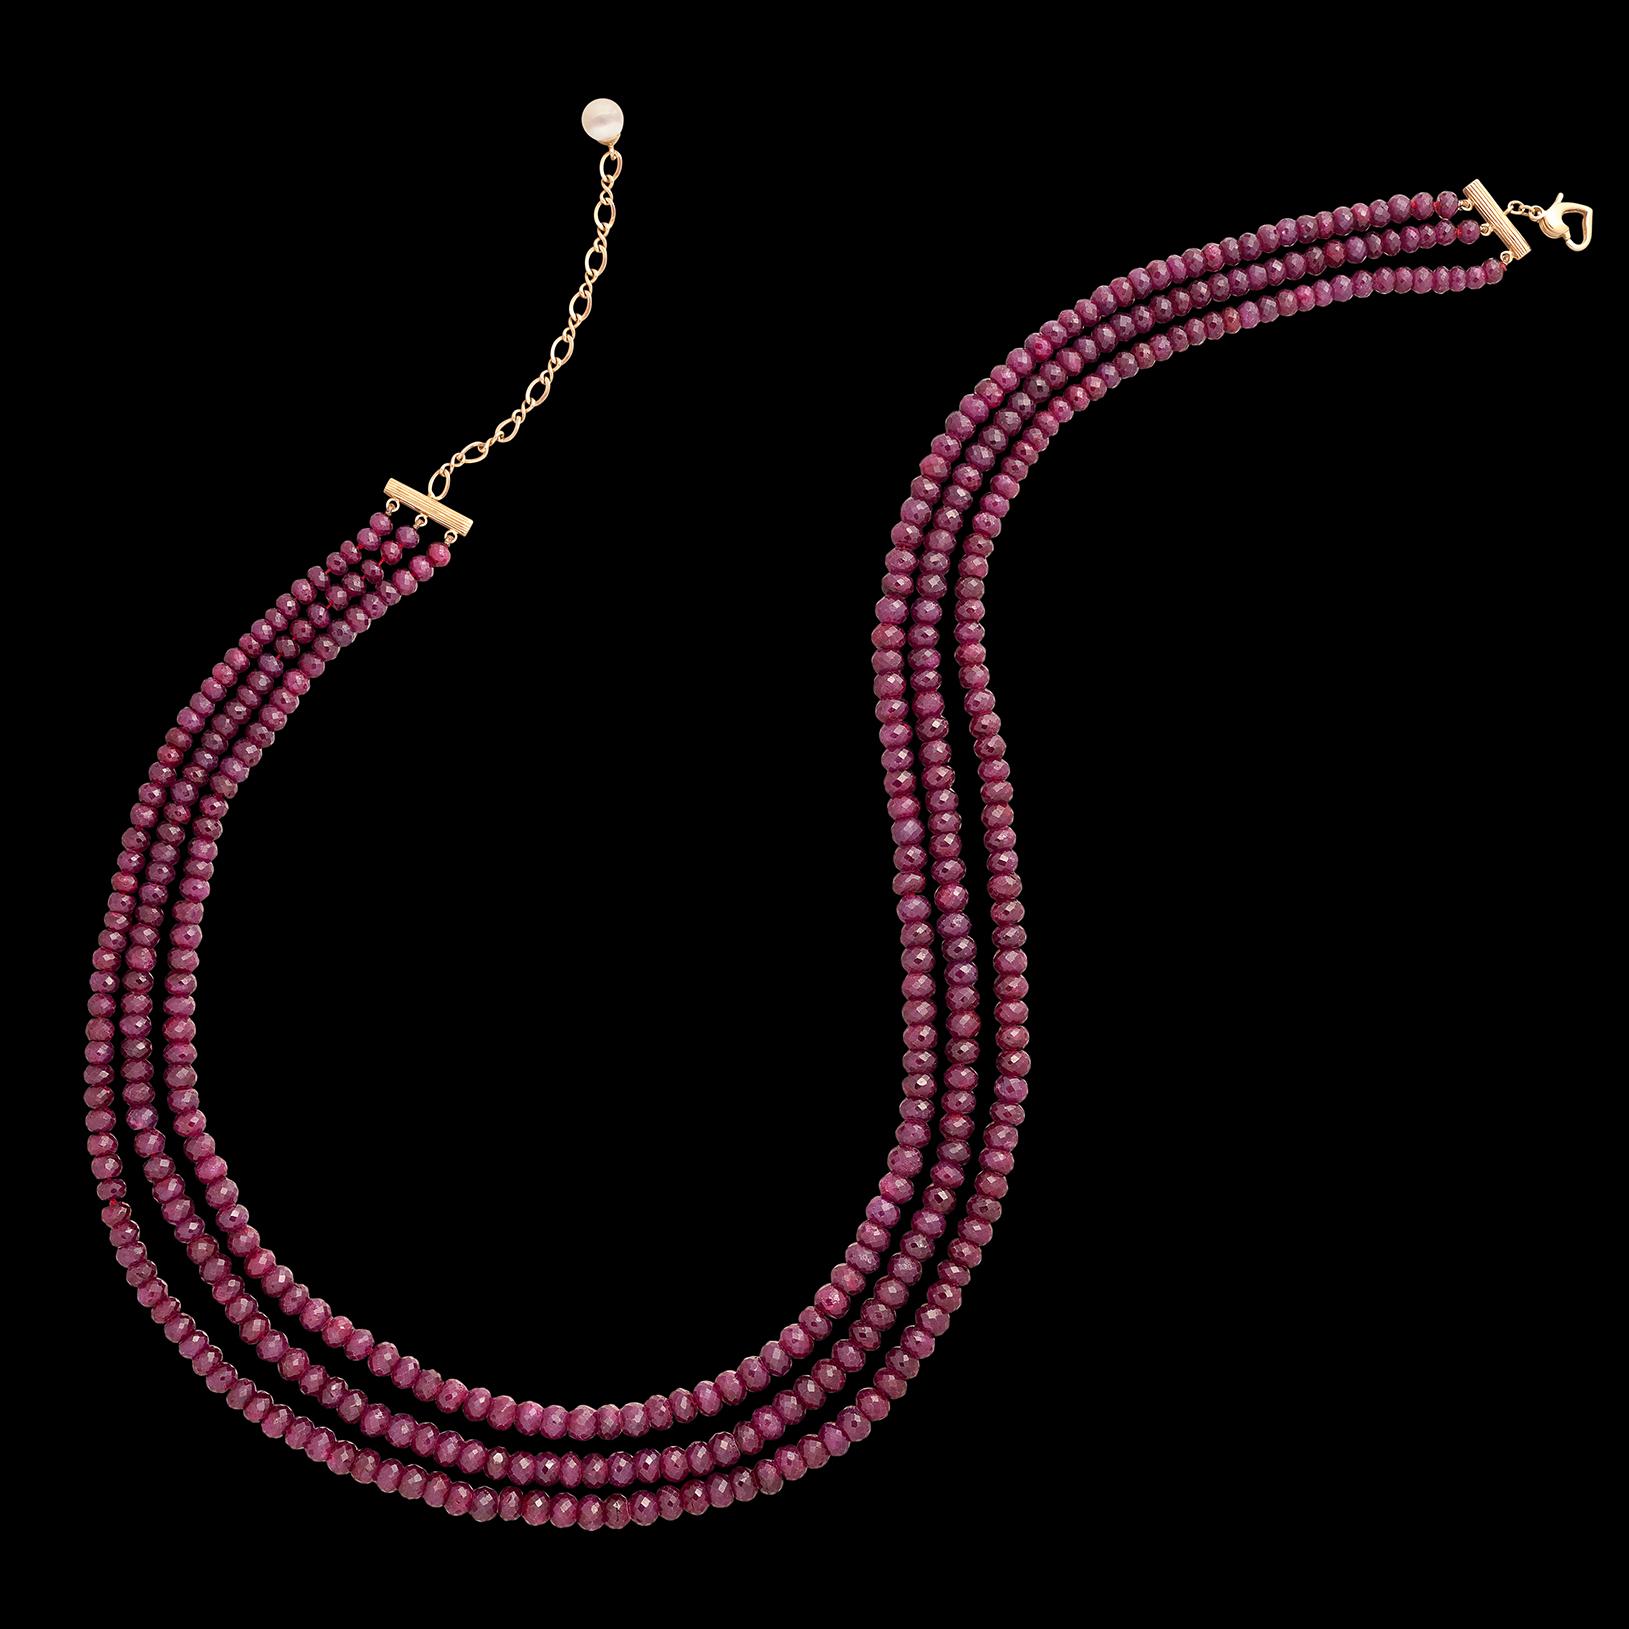 Briolette Cut 542 carat 3-Strand Ruby Necklace For Sale